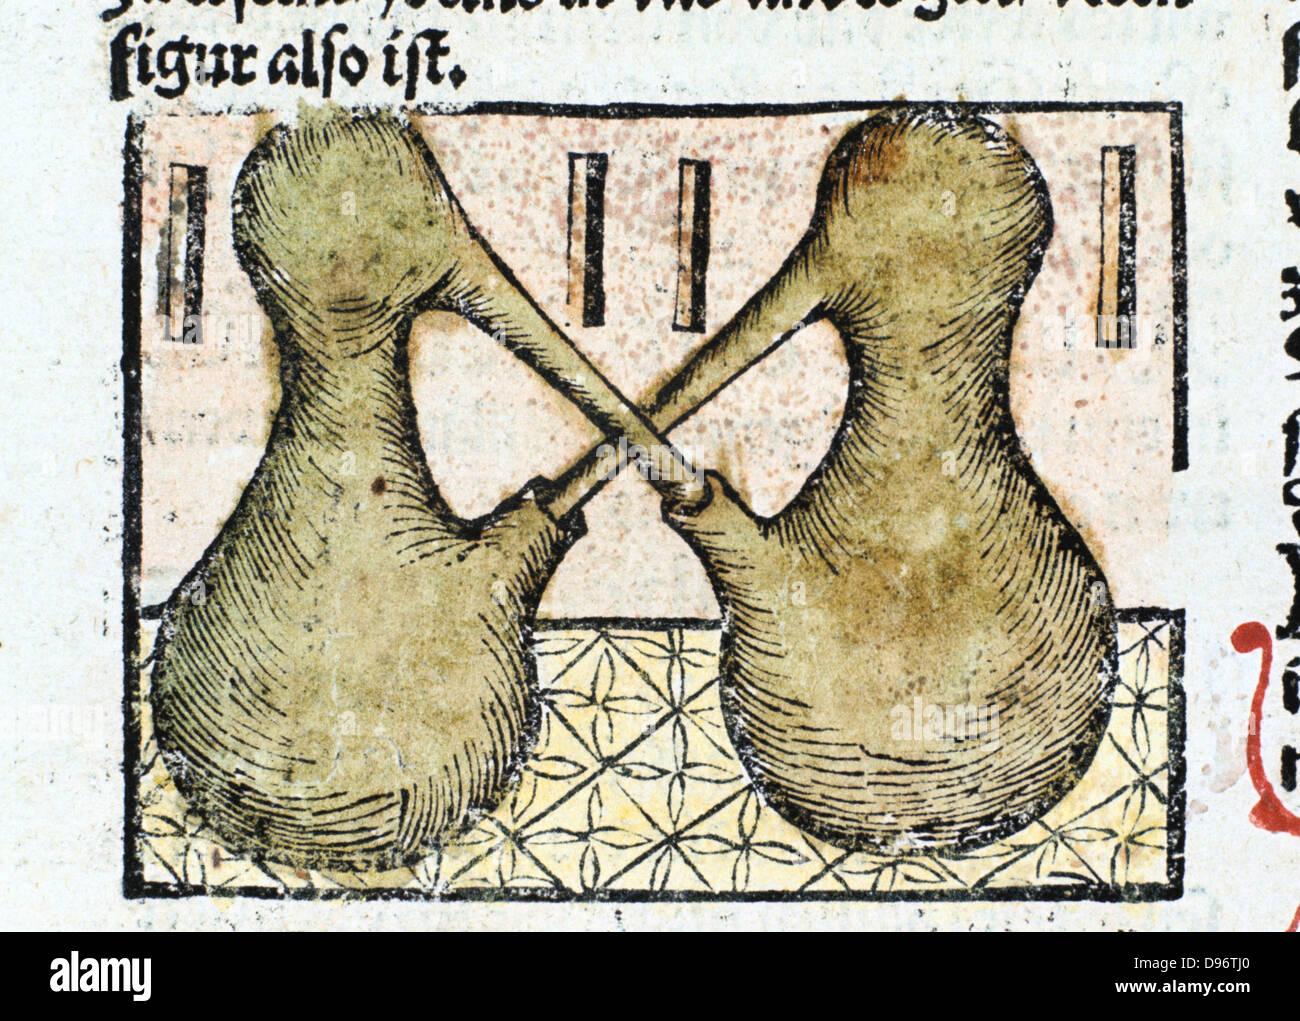 Distillation 1500. Distilling using double pelicans. From ' Liber de arte distillandi de simplicibus' by Hieronmus Braunschweig. (Strasbourg, 1500). Stock Photo